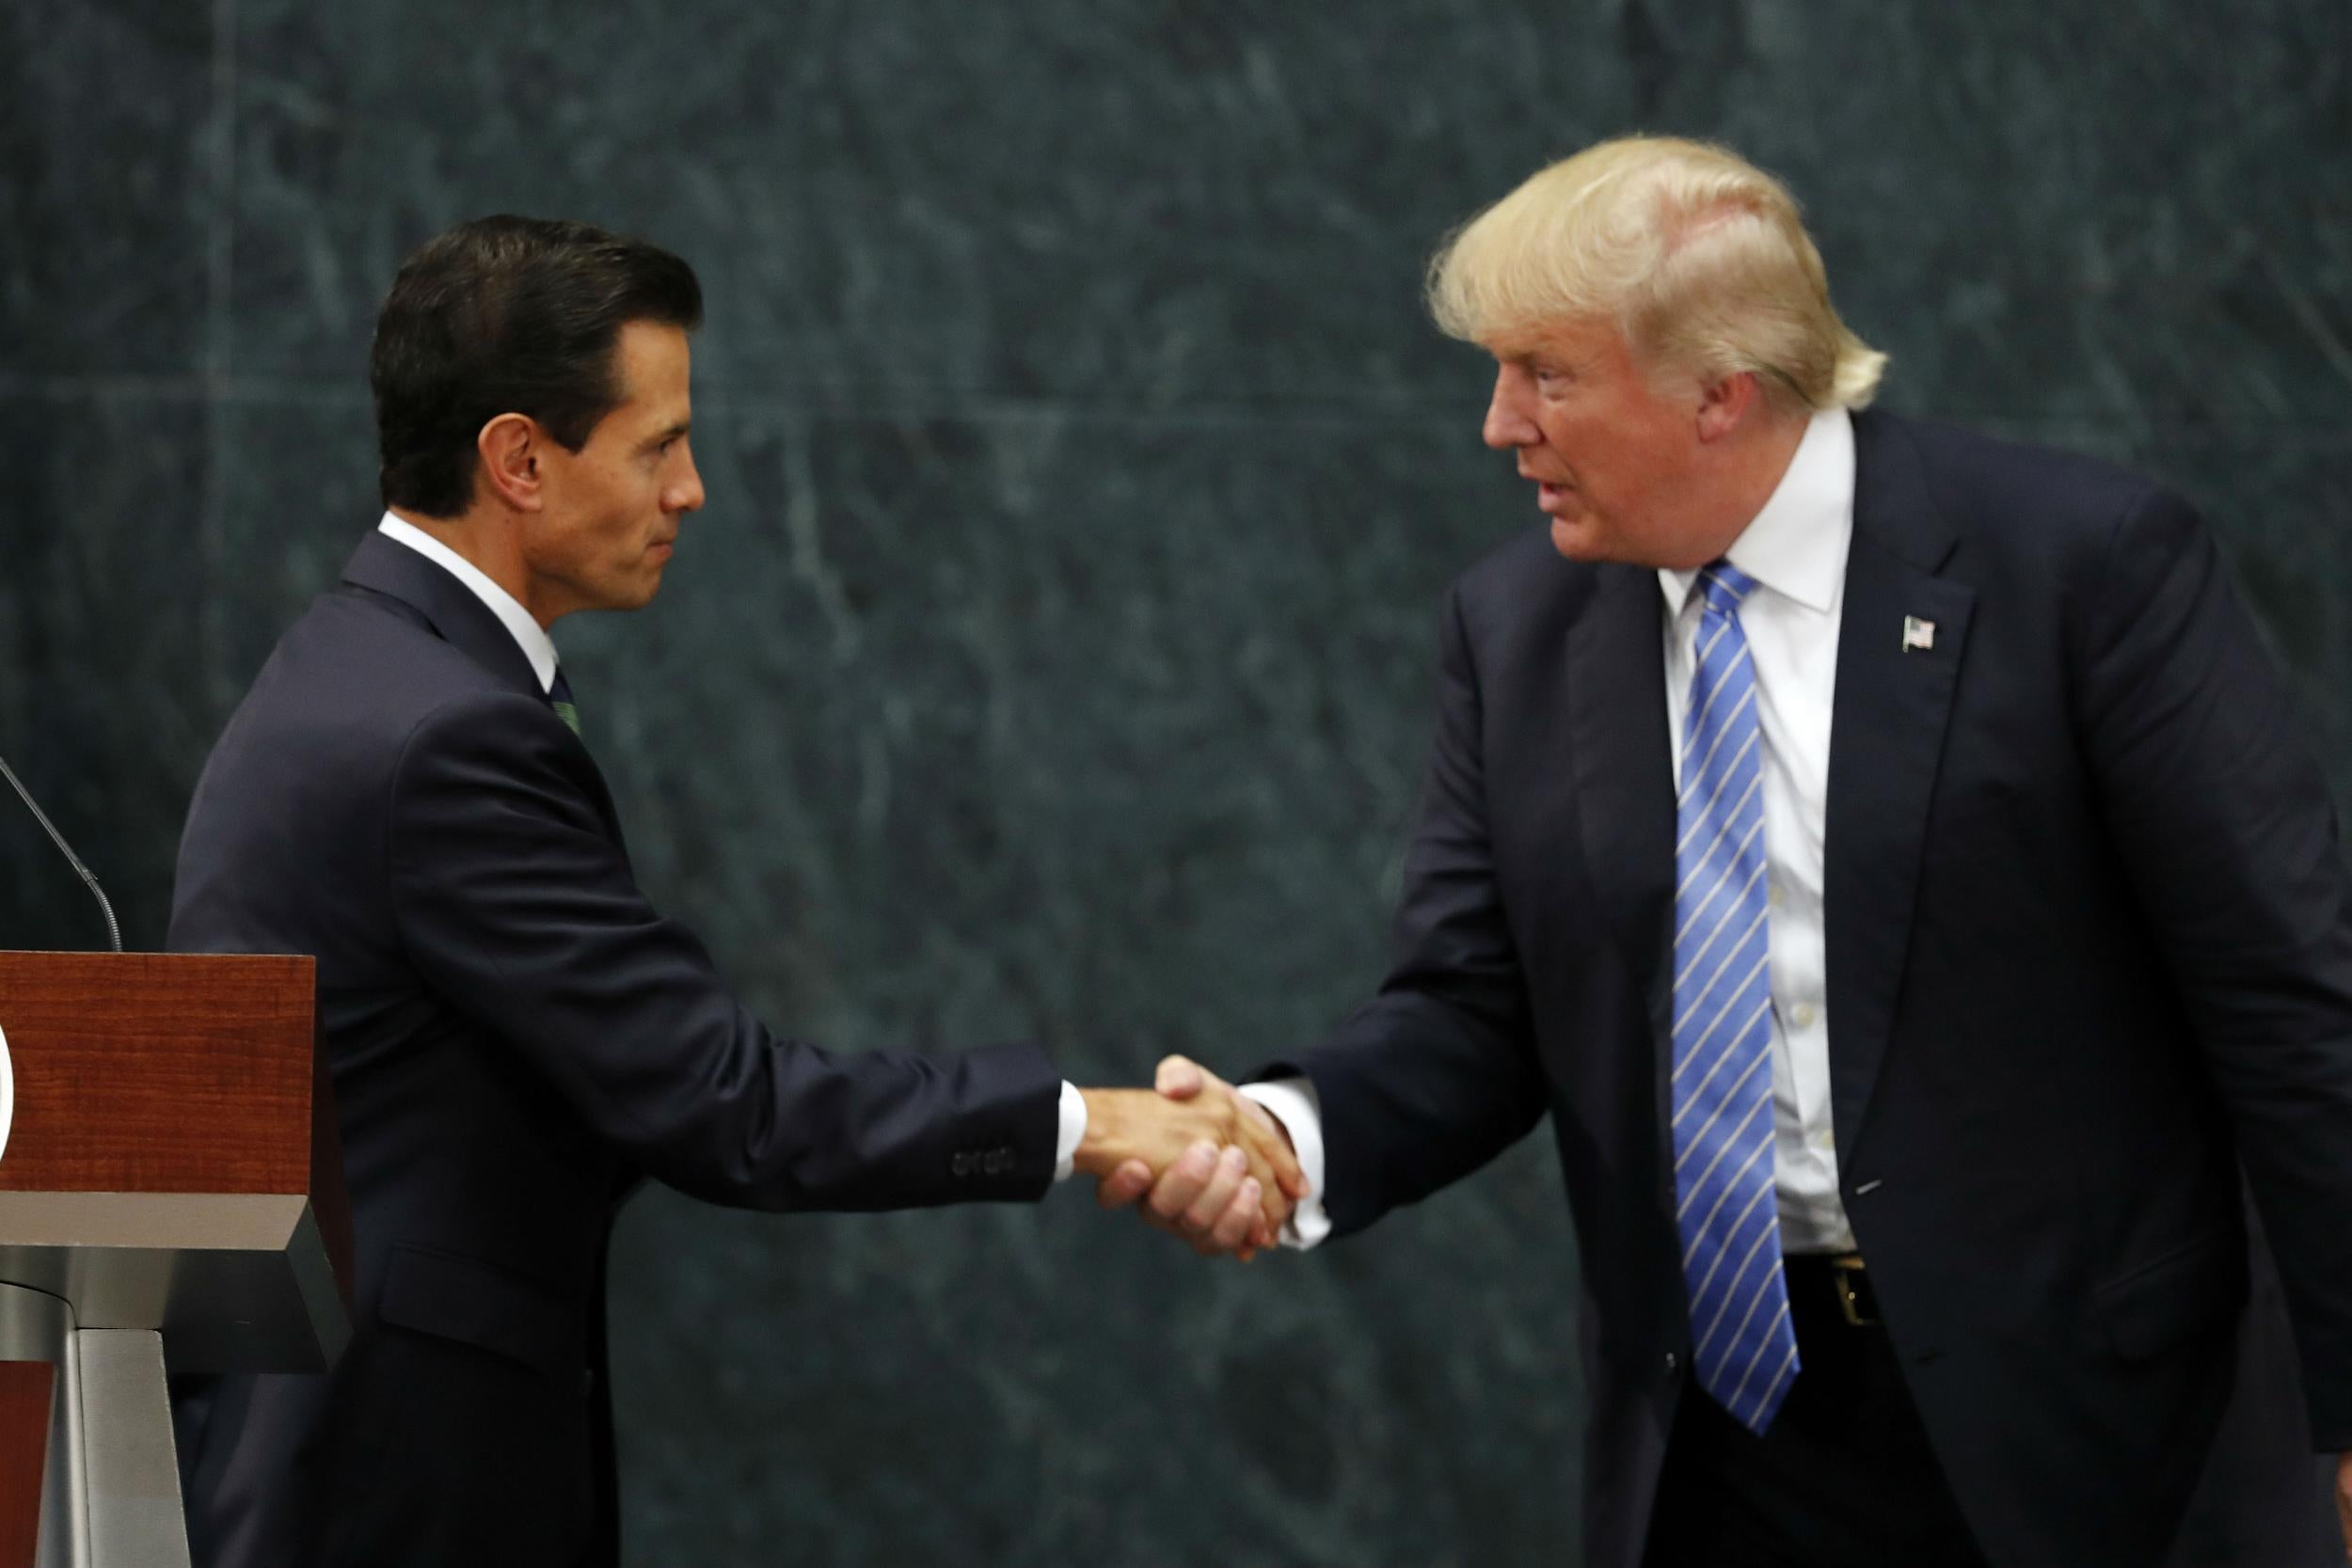 Mr Trump and President Enrique Pena Nieto